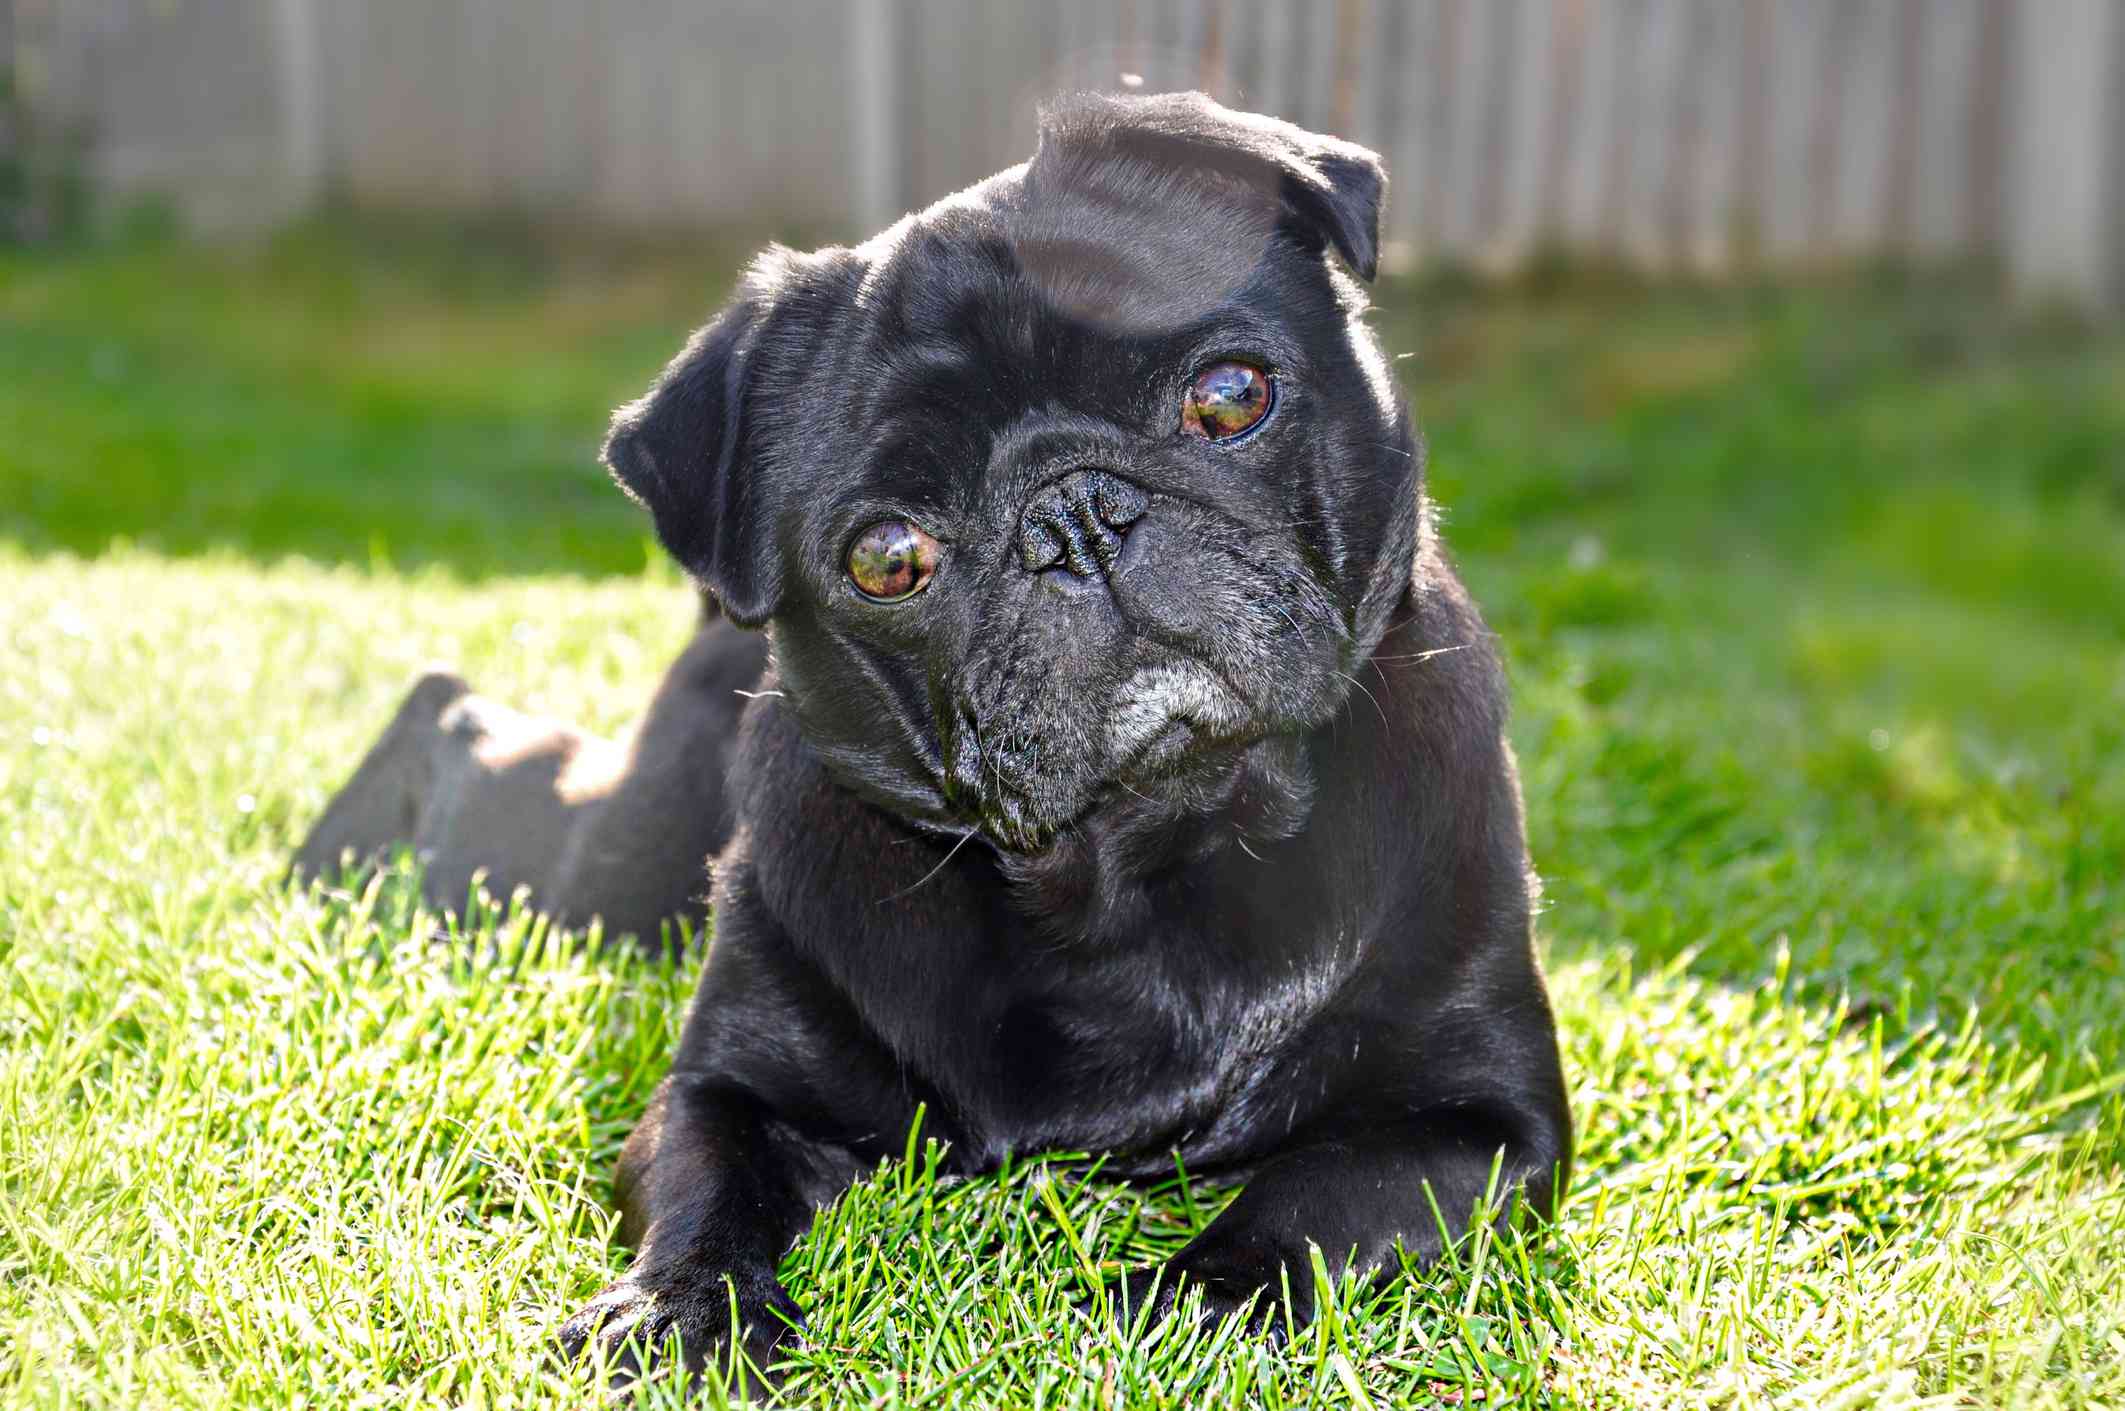 Black Pug lying on garden grass